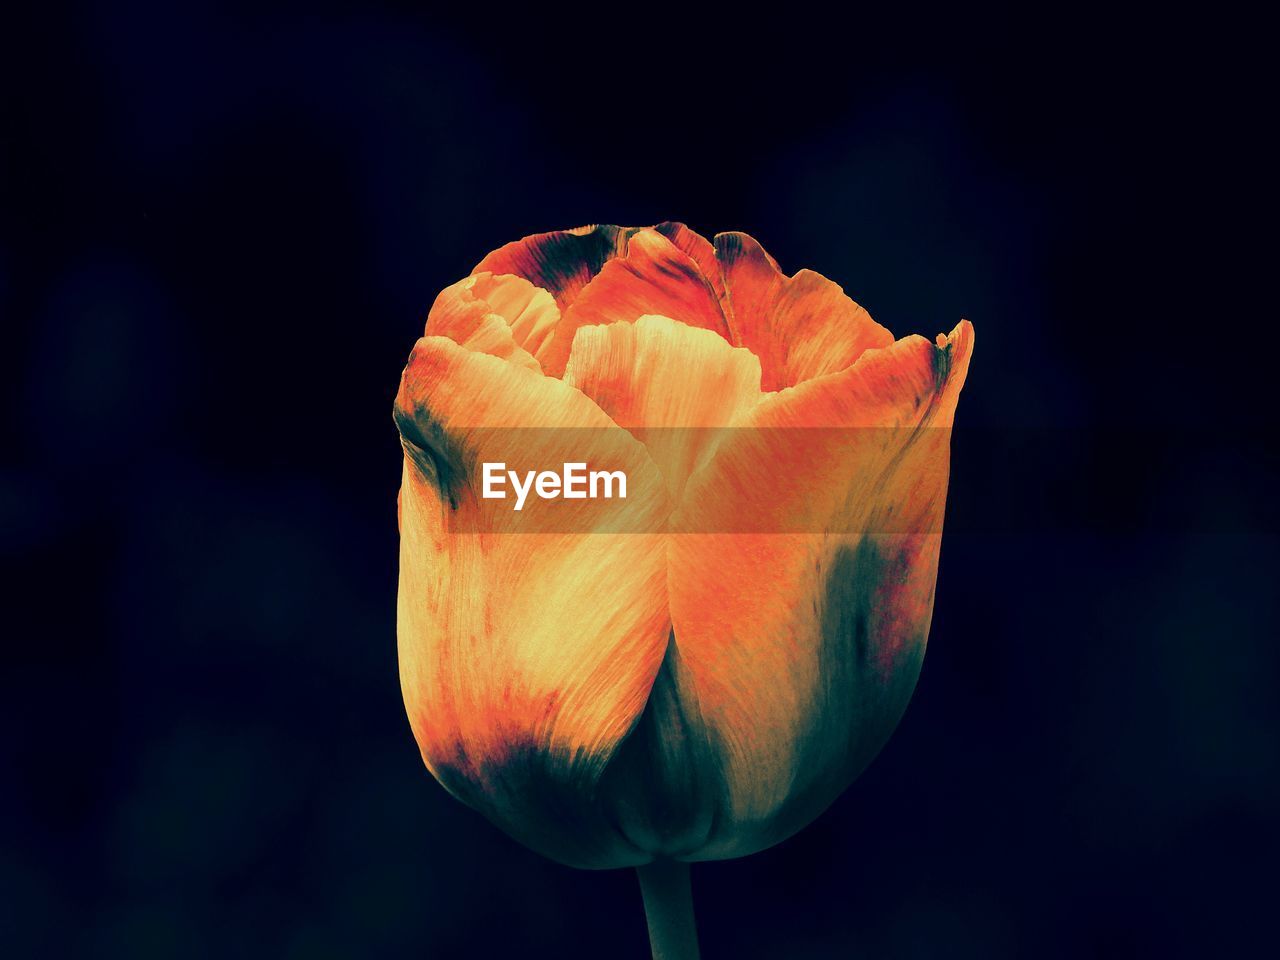 Selective color tulip. color altered. orange against black background.